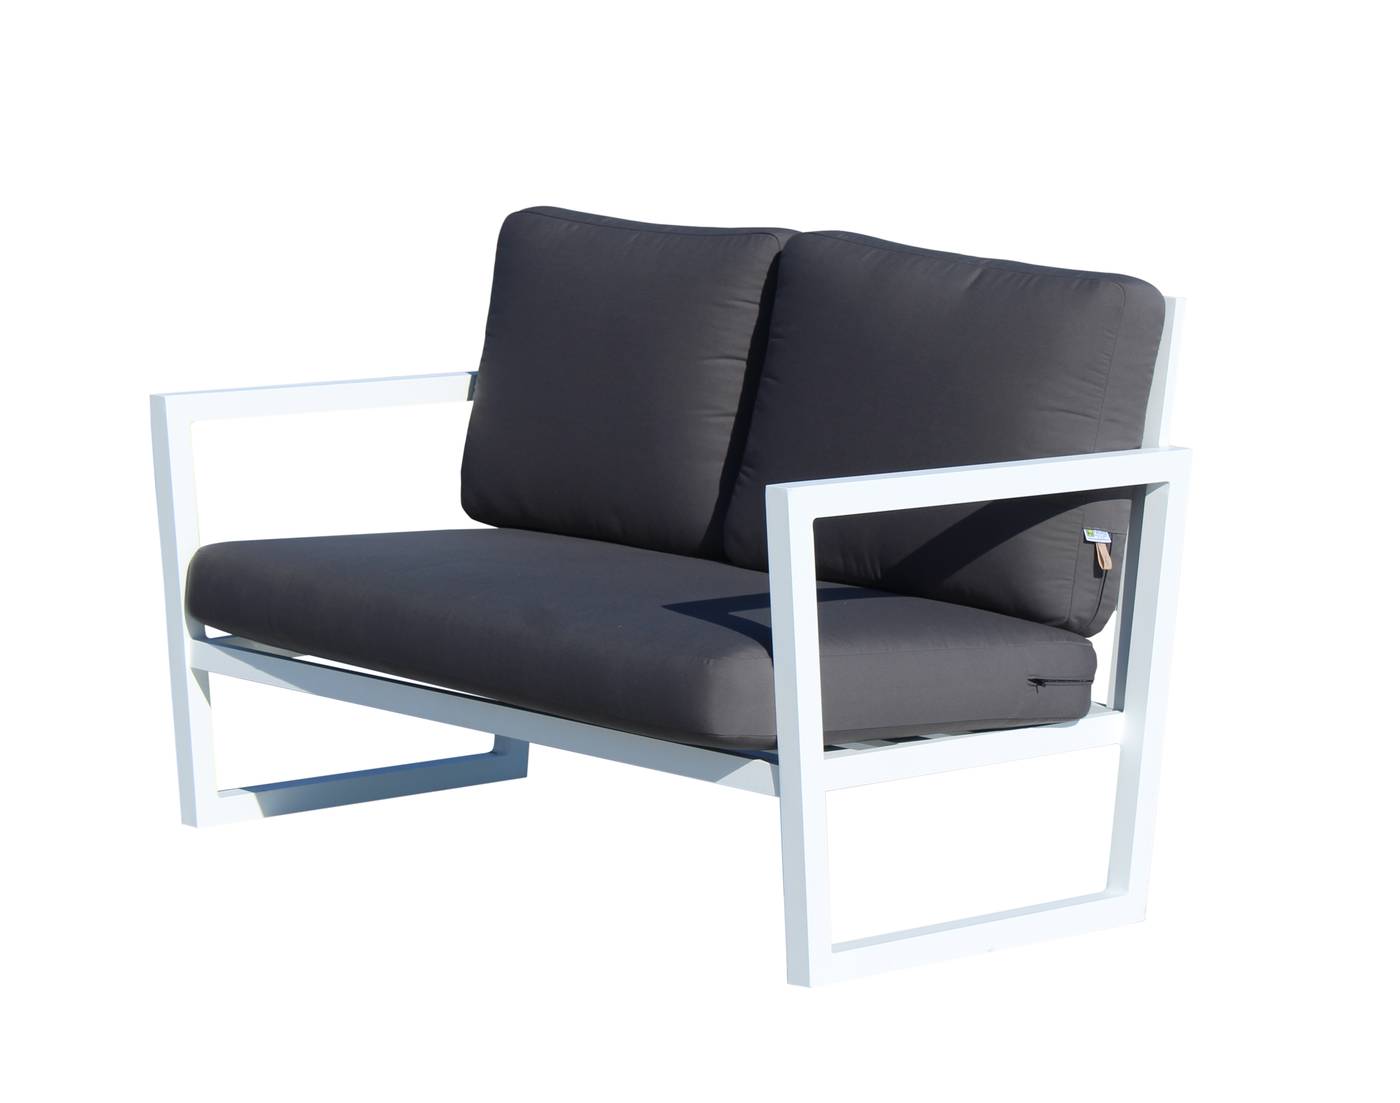 Set Aluminio Alpine-7 - Conjunto de aluminio para exterior: sofá 2 plazas + 2 sillones + mesa de centro. Disponible en color blanco, antracita, champagne, plata o marrón.